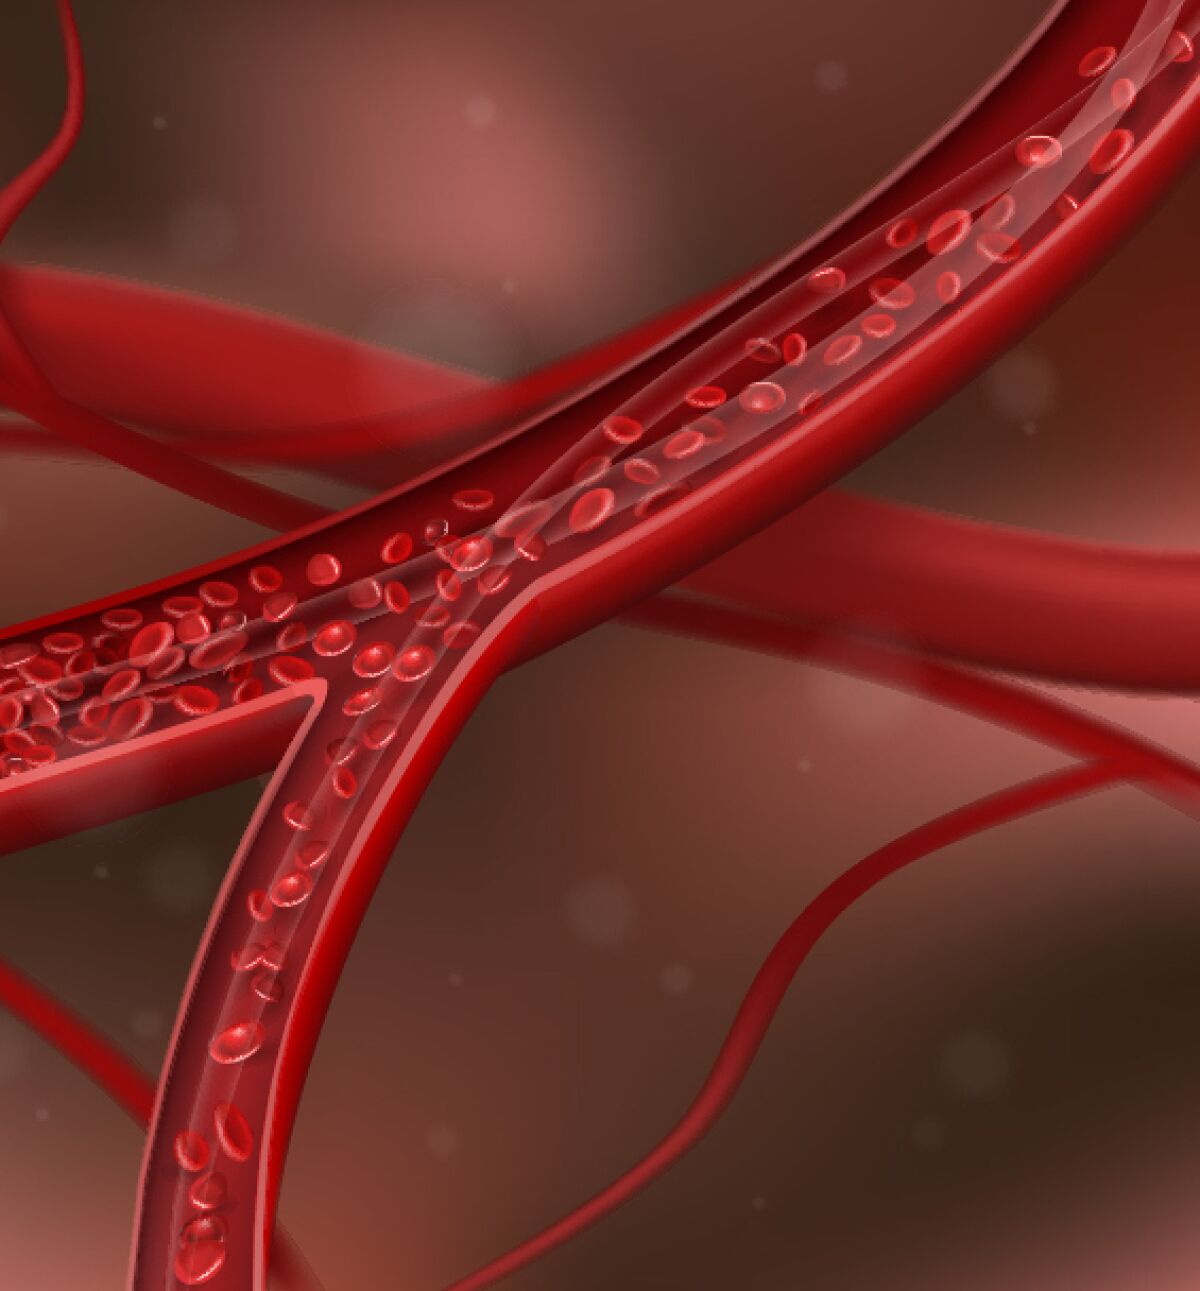 Artery blocked by cholesterol. Vector illustration